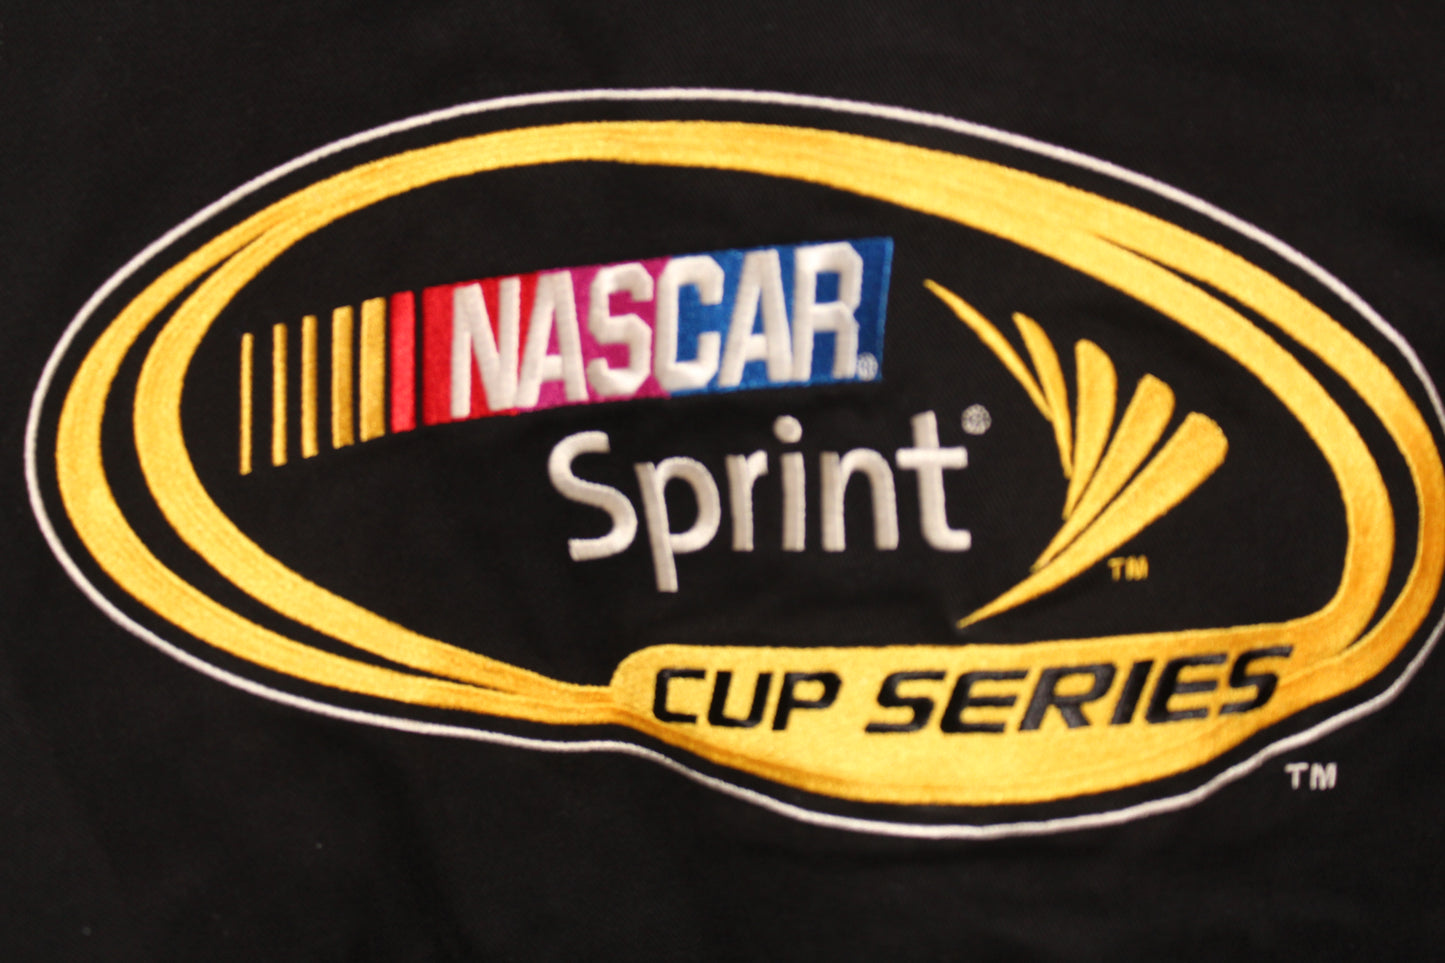 Rare Sprint Cup Series NASCAR Retro Twill Jacket (M)